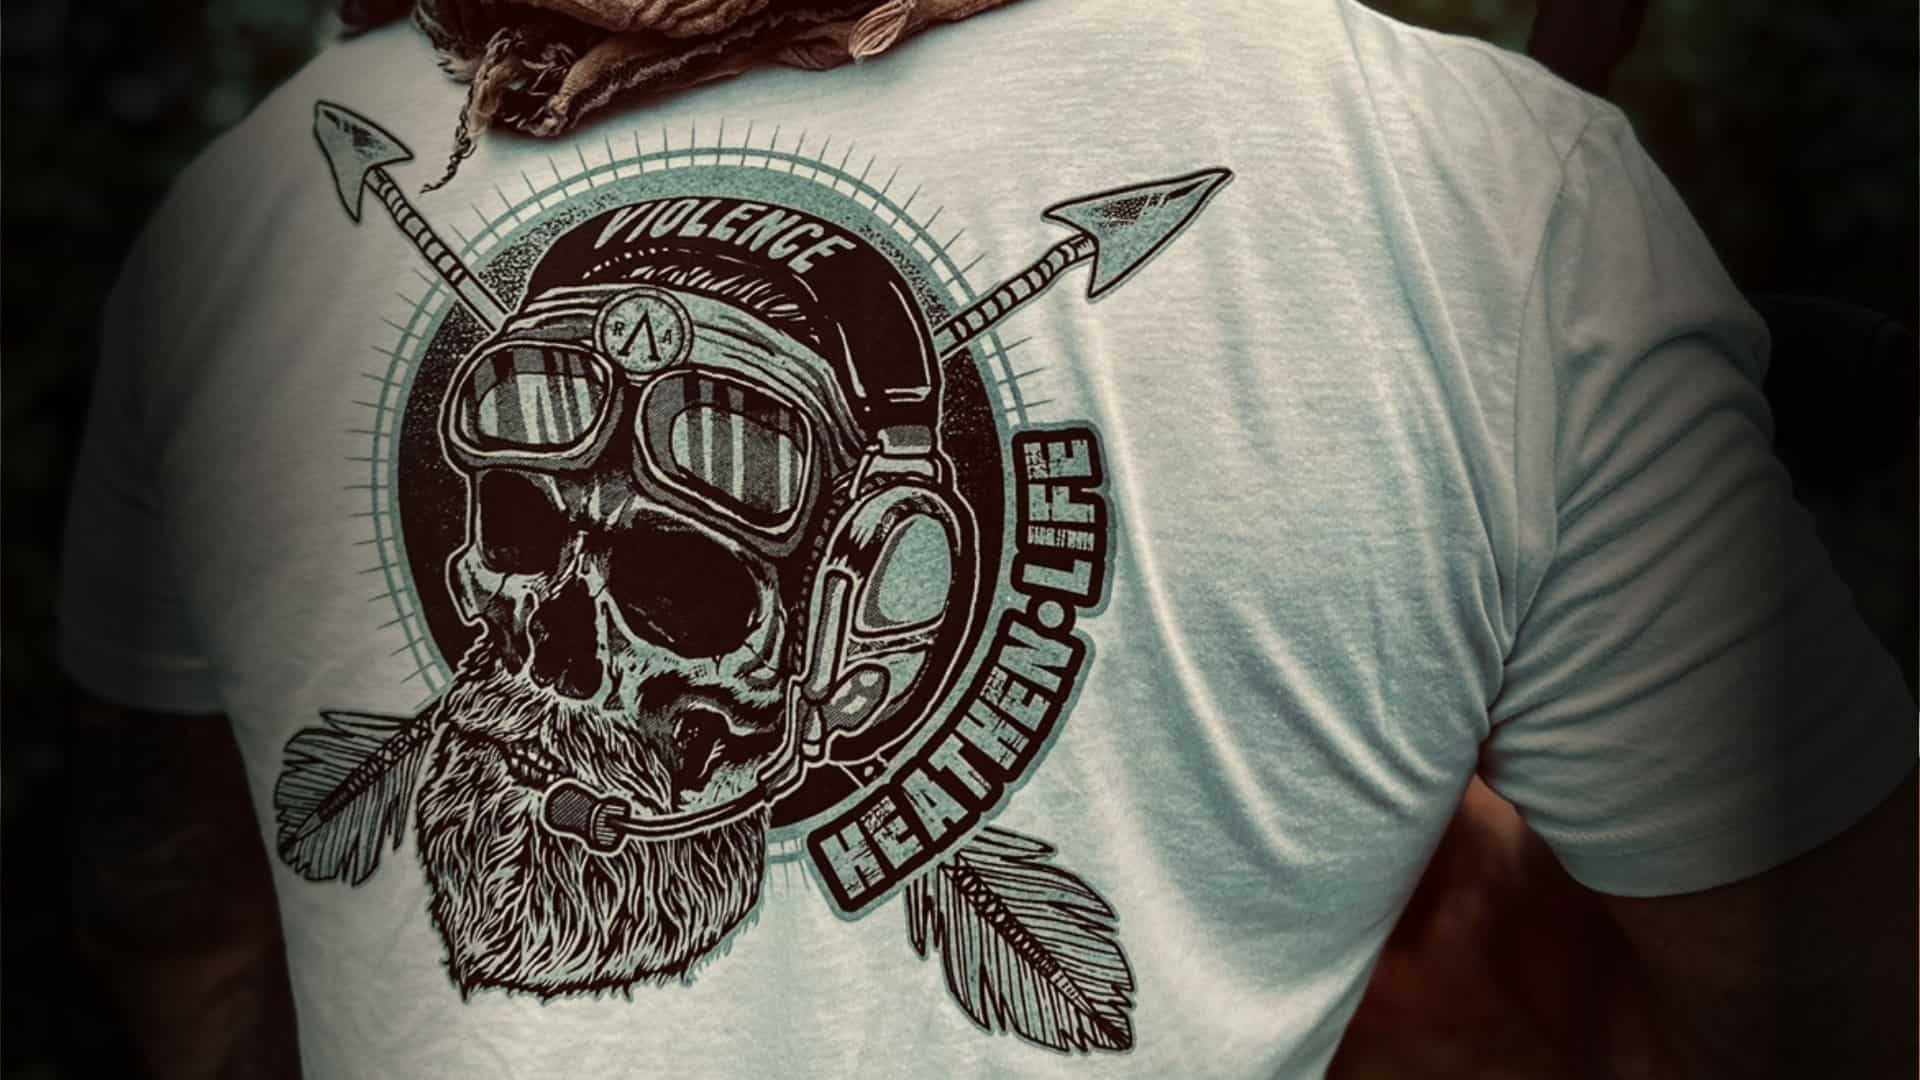 warrior themed shirts